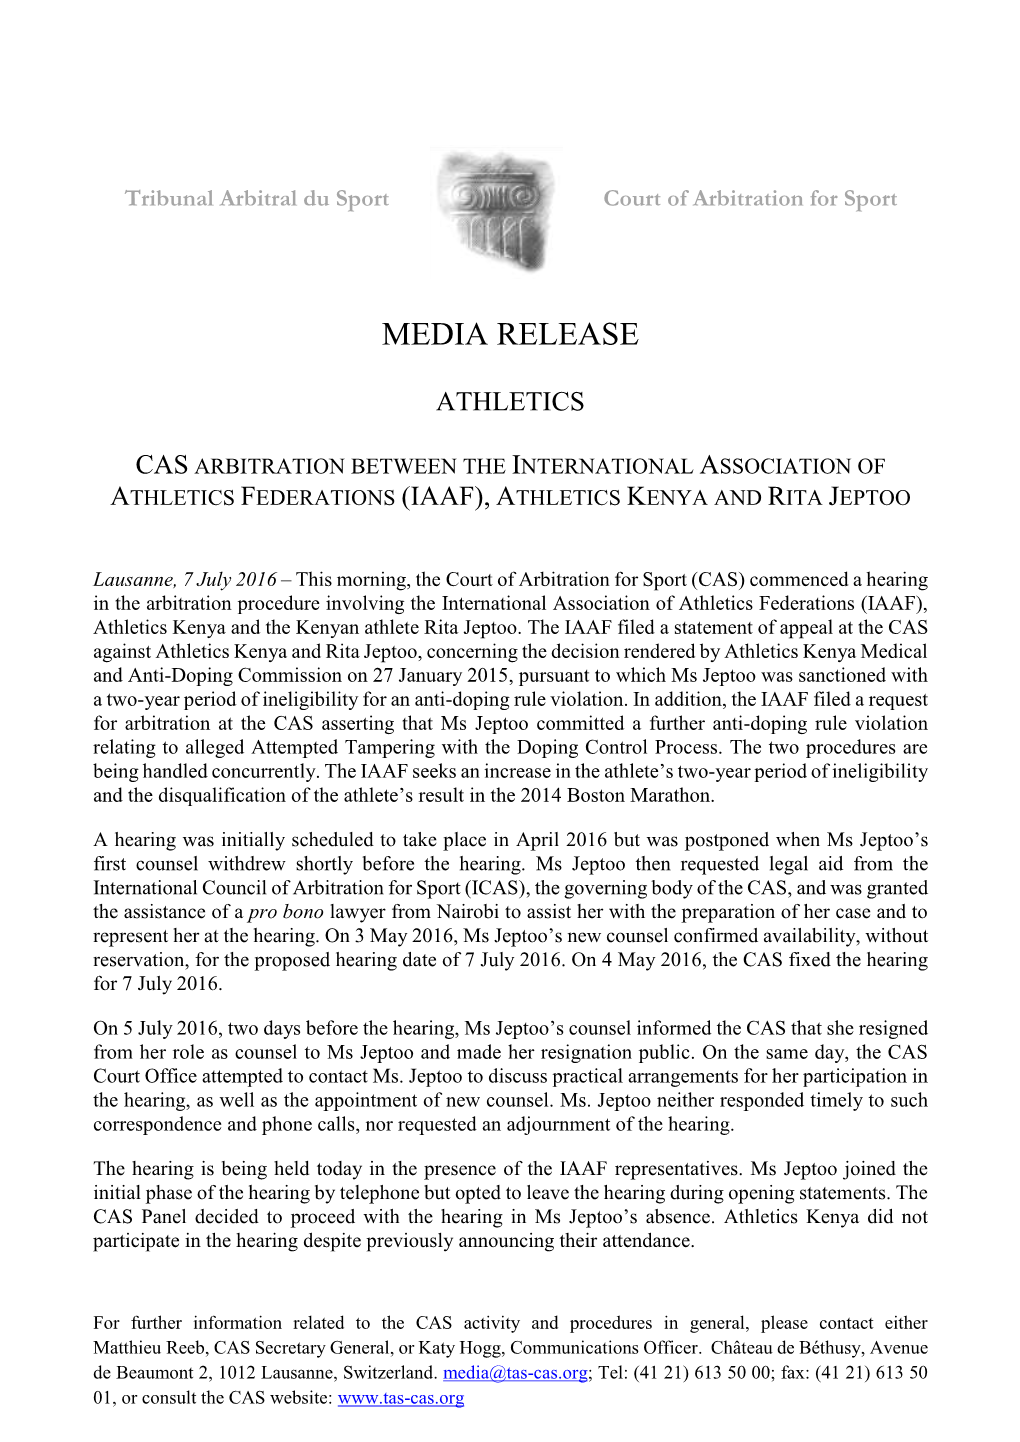 CAS Arbitration Between the IAAF, Athletics Kenya and Rita Jeptoo